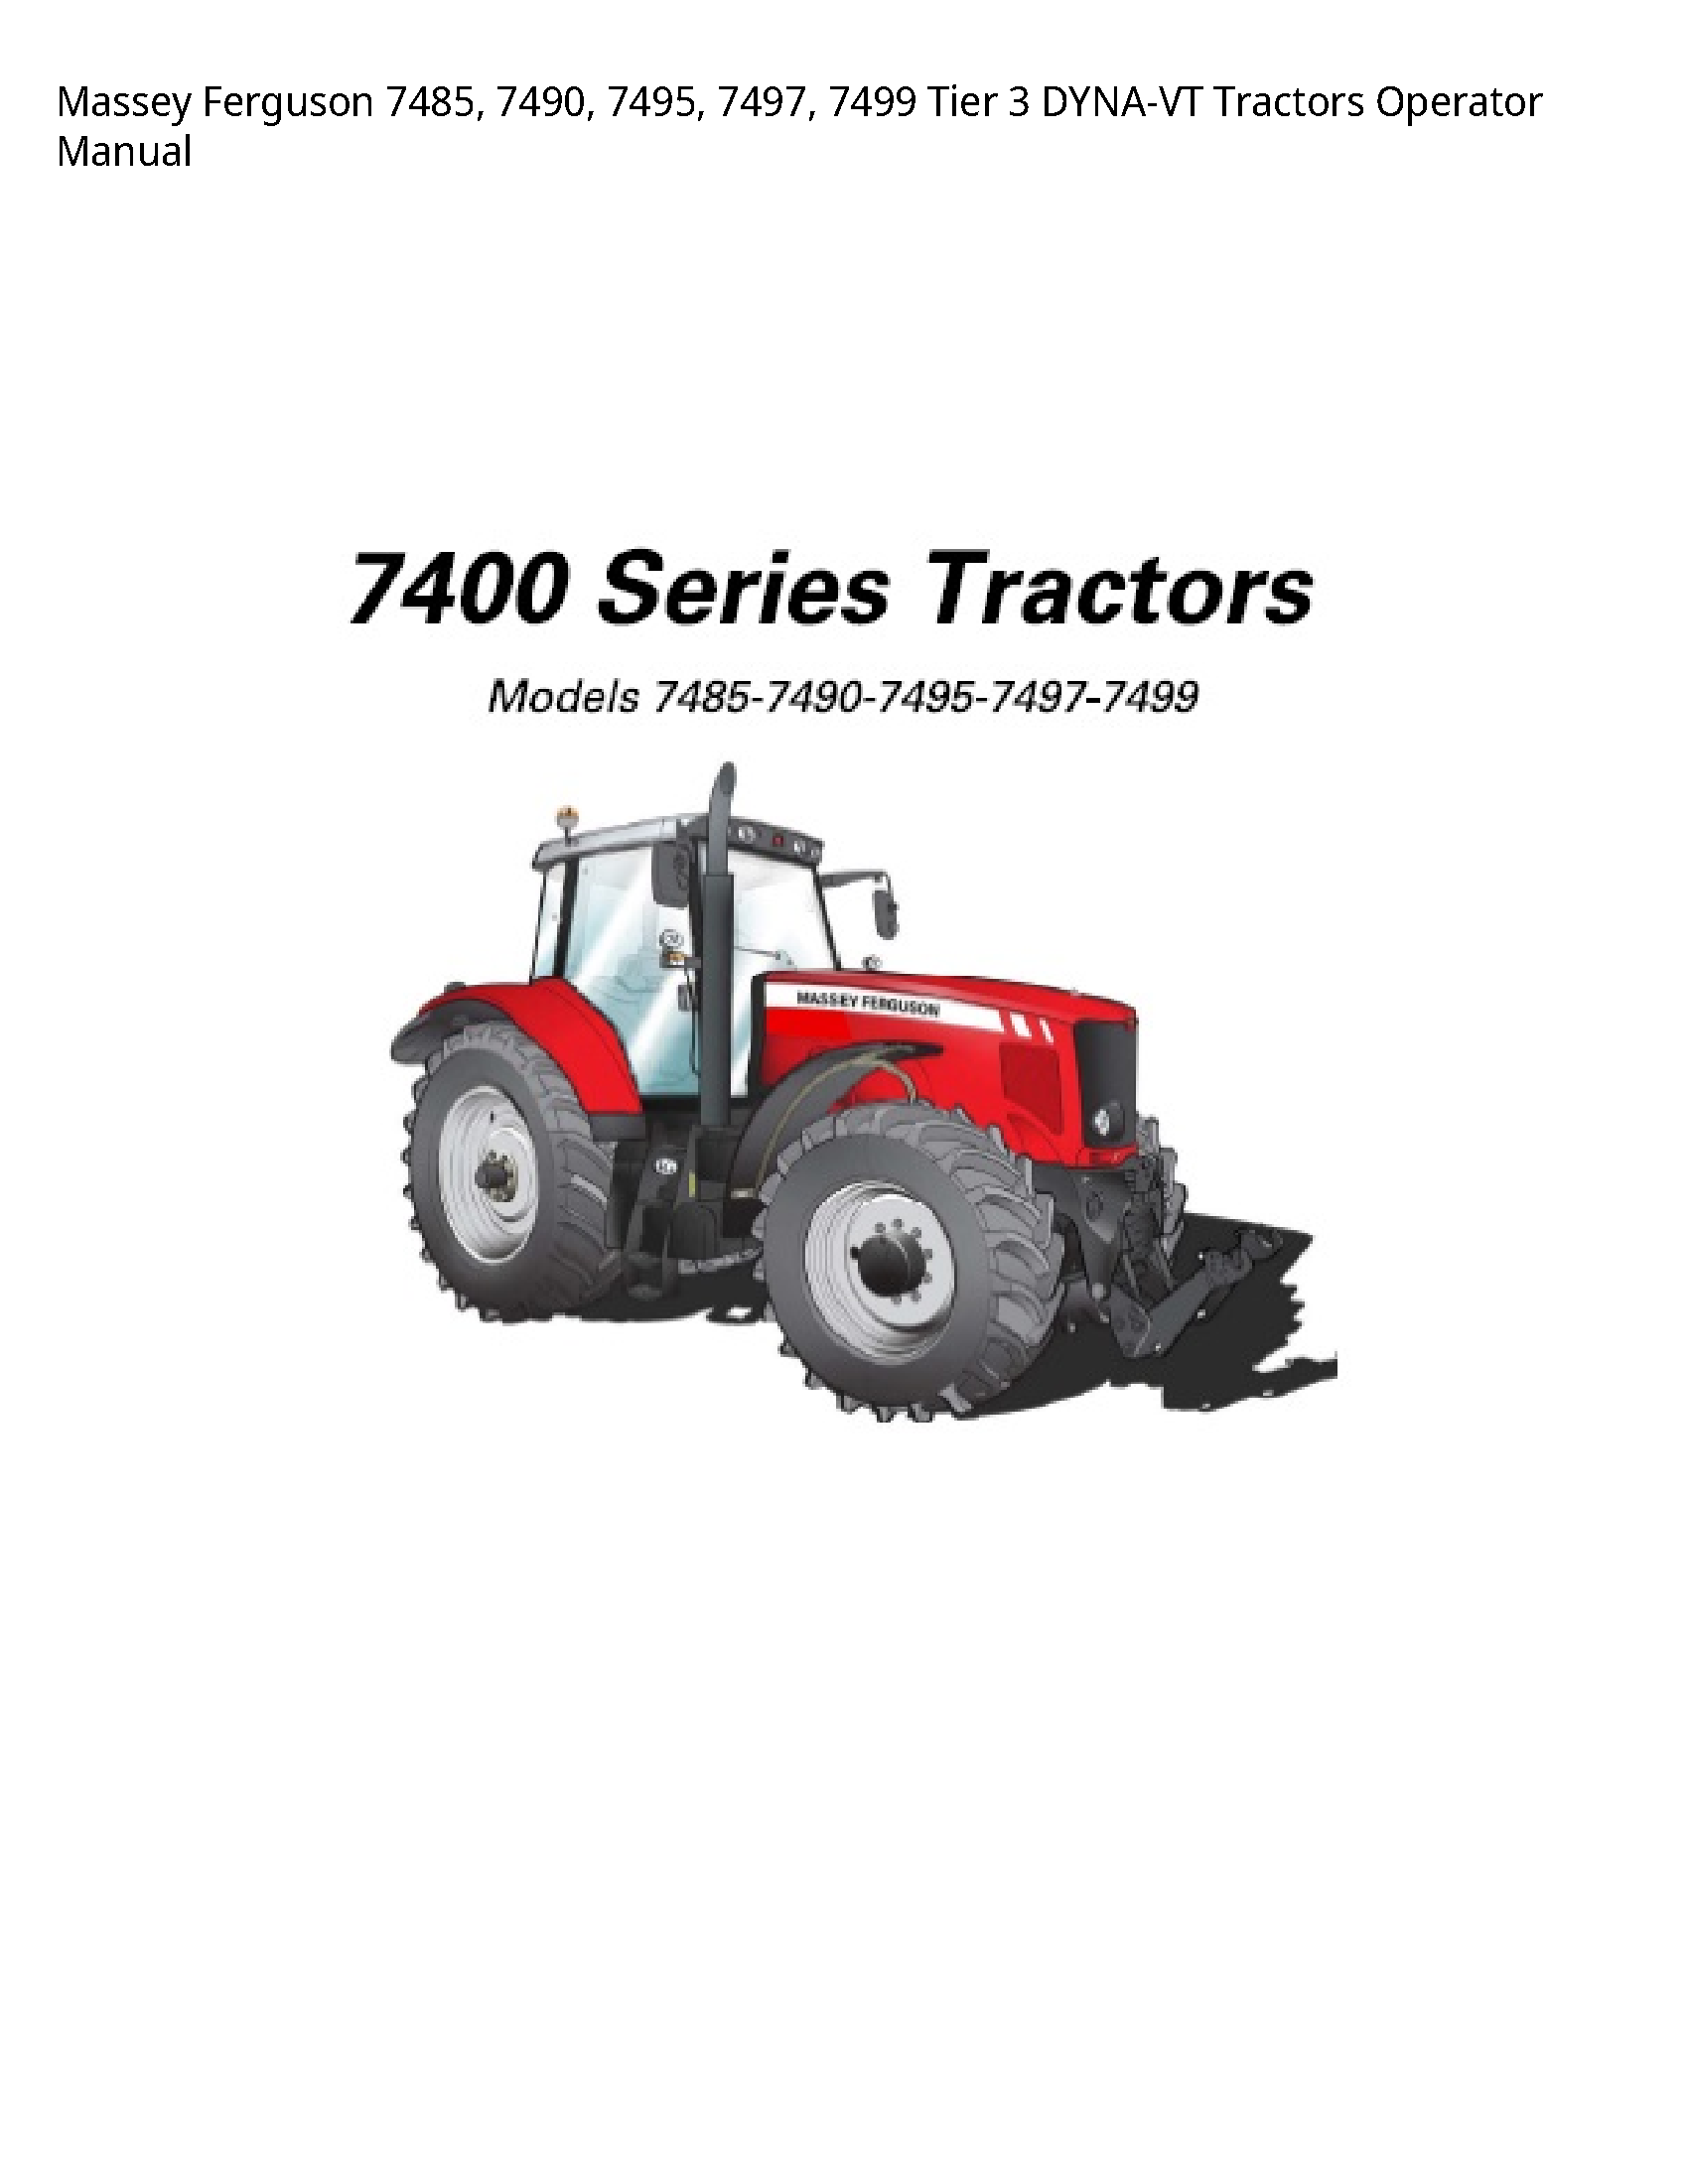 Massey Ferguson 7485 Tier DYNA-VT Tractors Operator manual